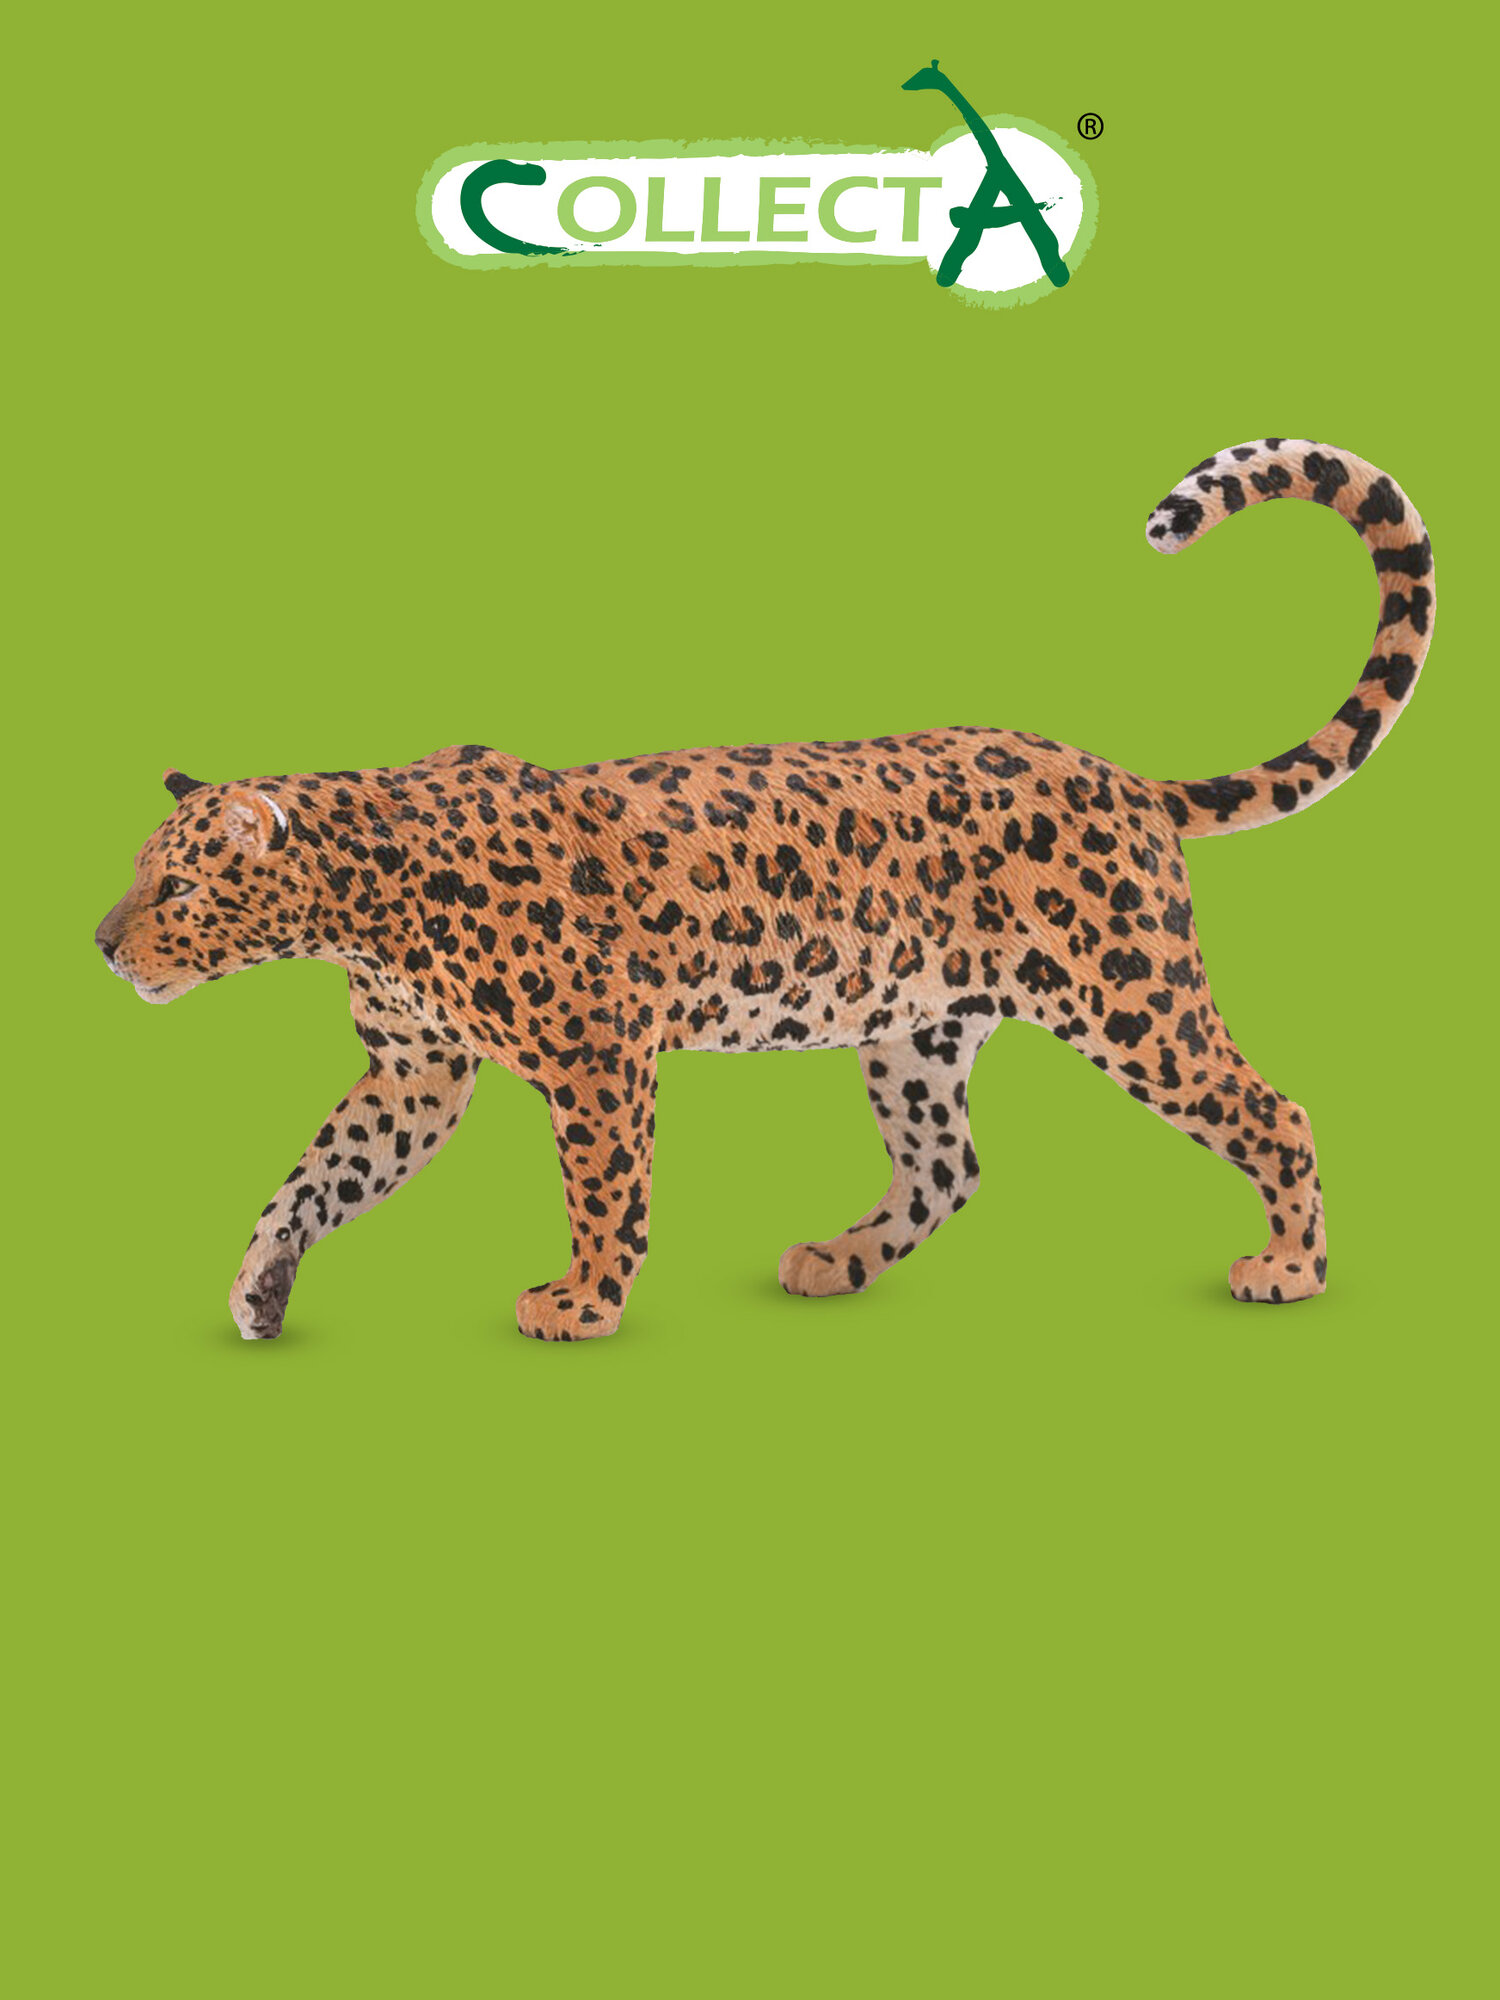 Фигурка животного Collecta, Леопард Африканский